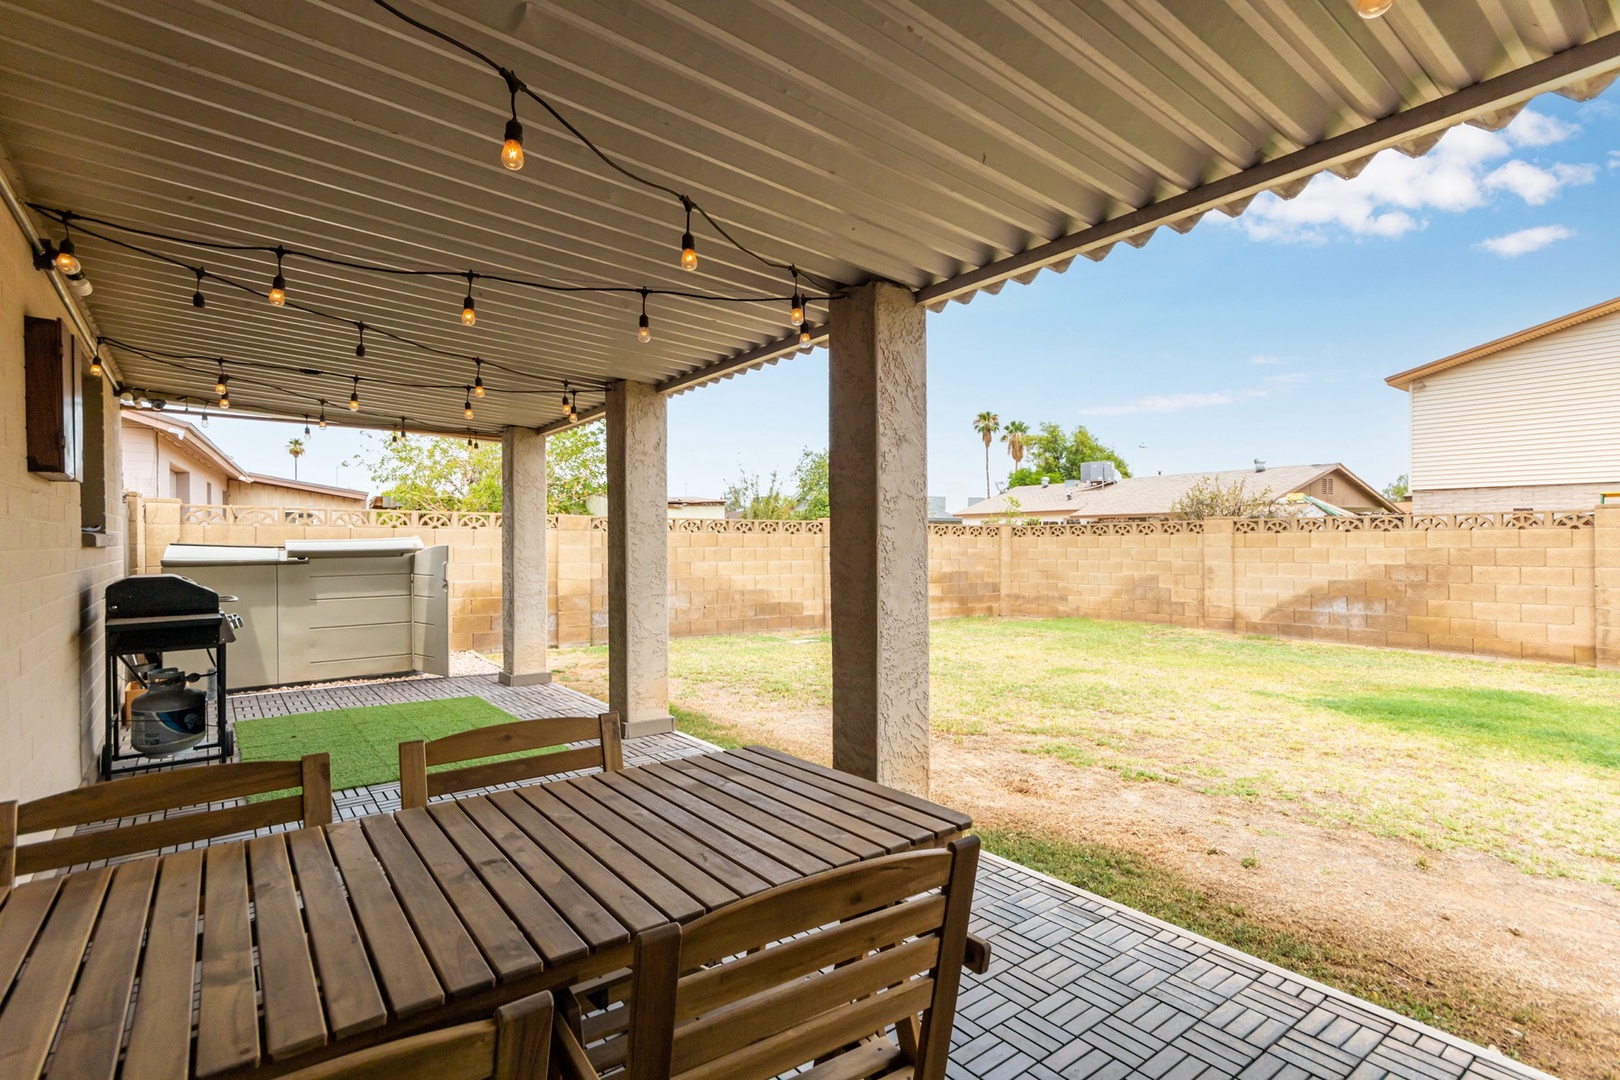 spacious private backyard and patio to enjoy the Arizona sunshine